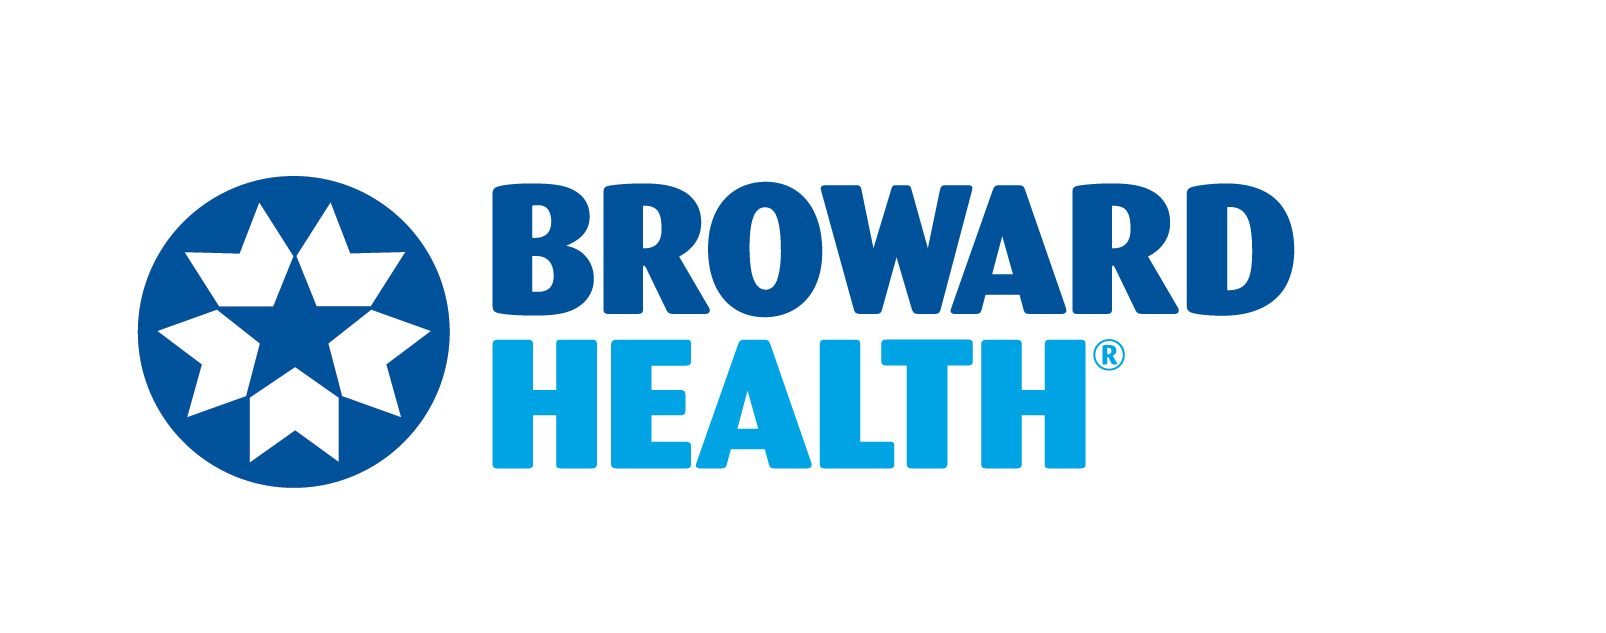 CCC. Salud de Broward (Nivel 4)